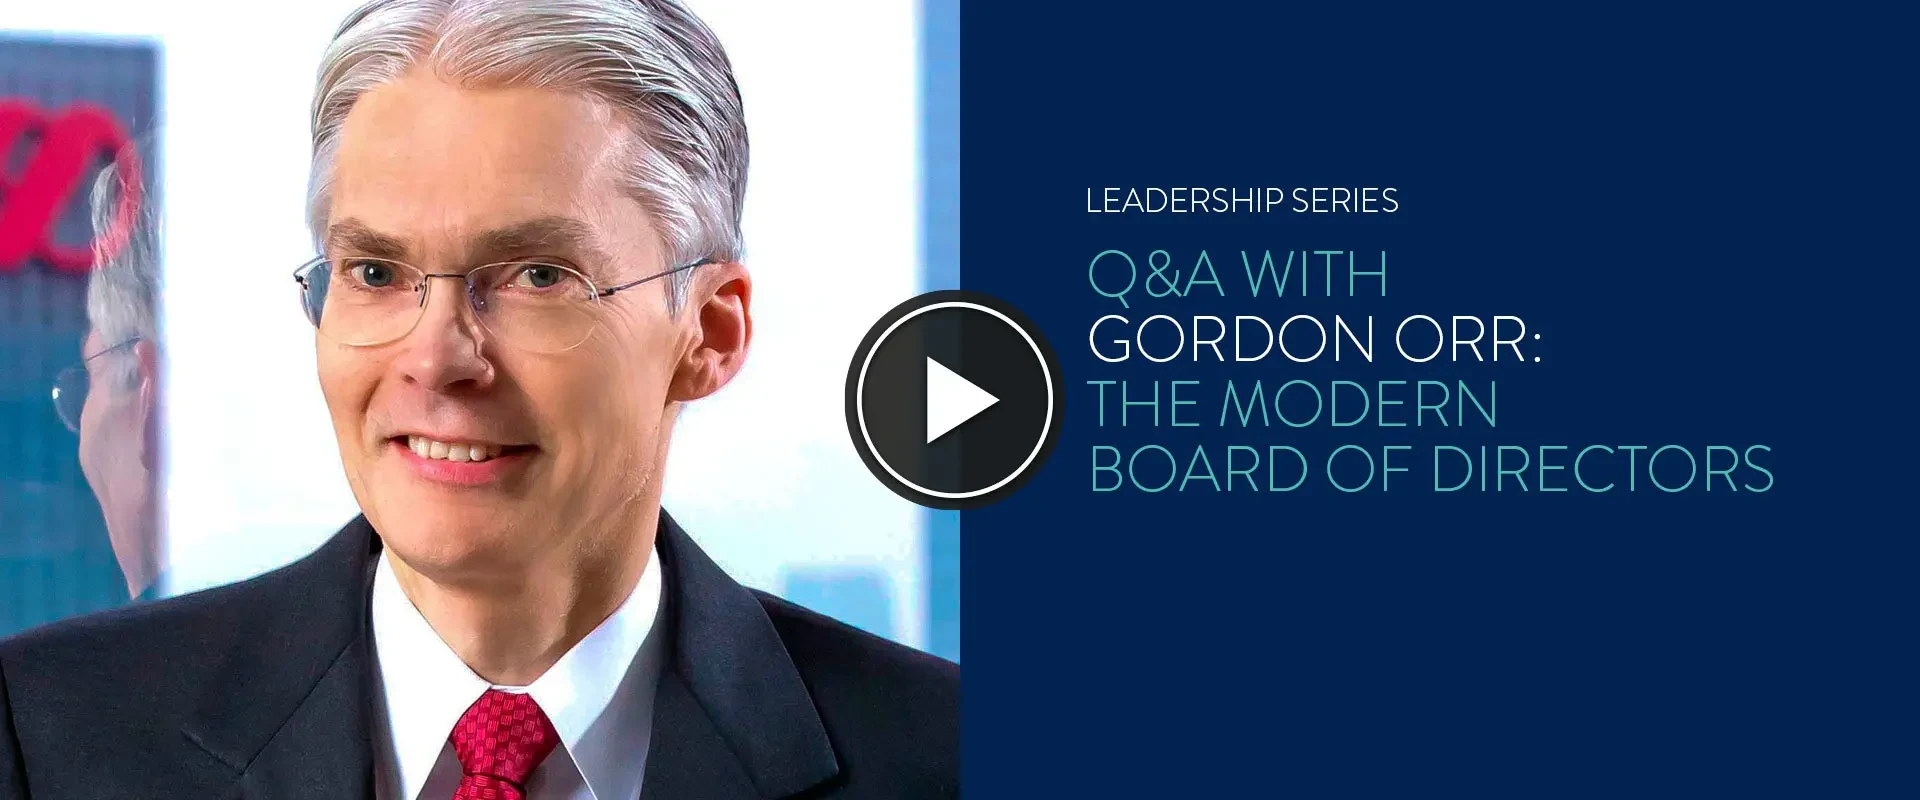 Video: Gordon Orr on the Modern Board of Directors